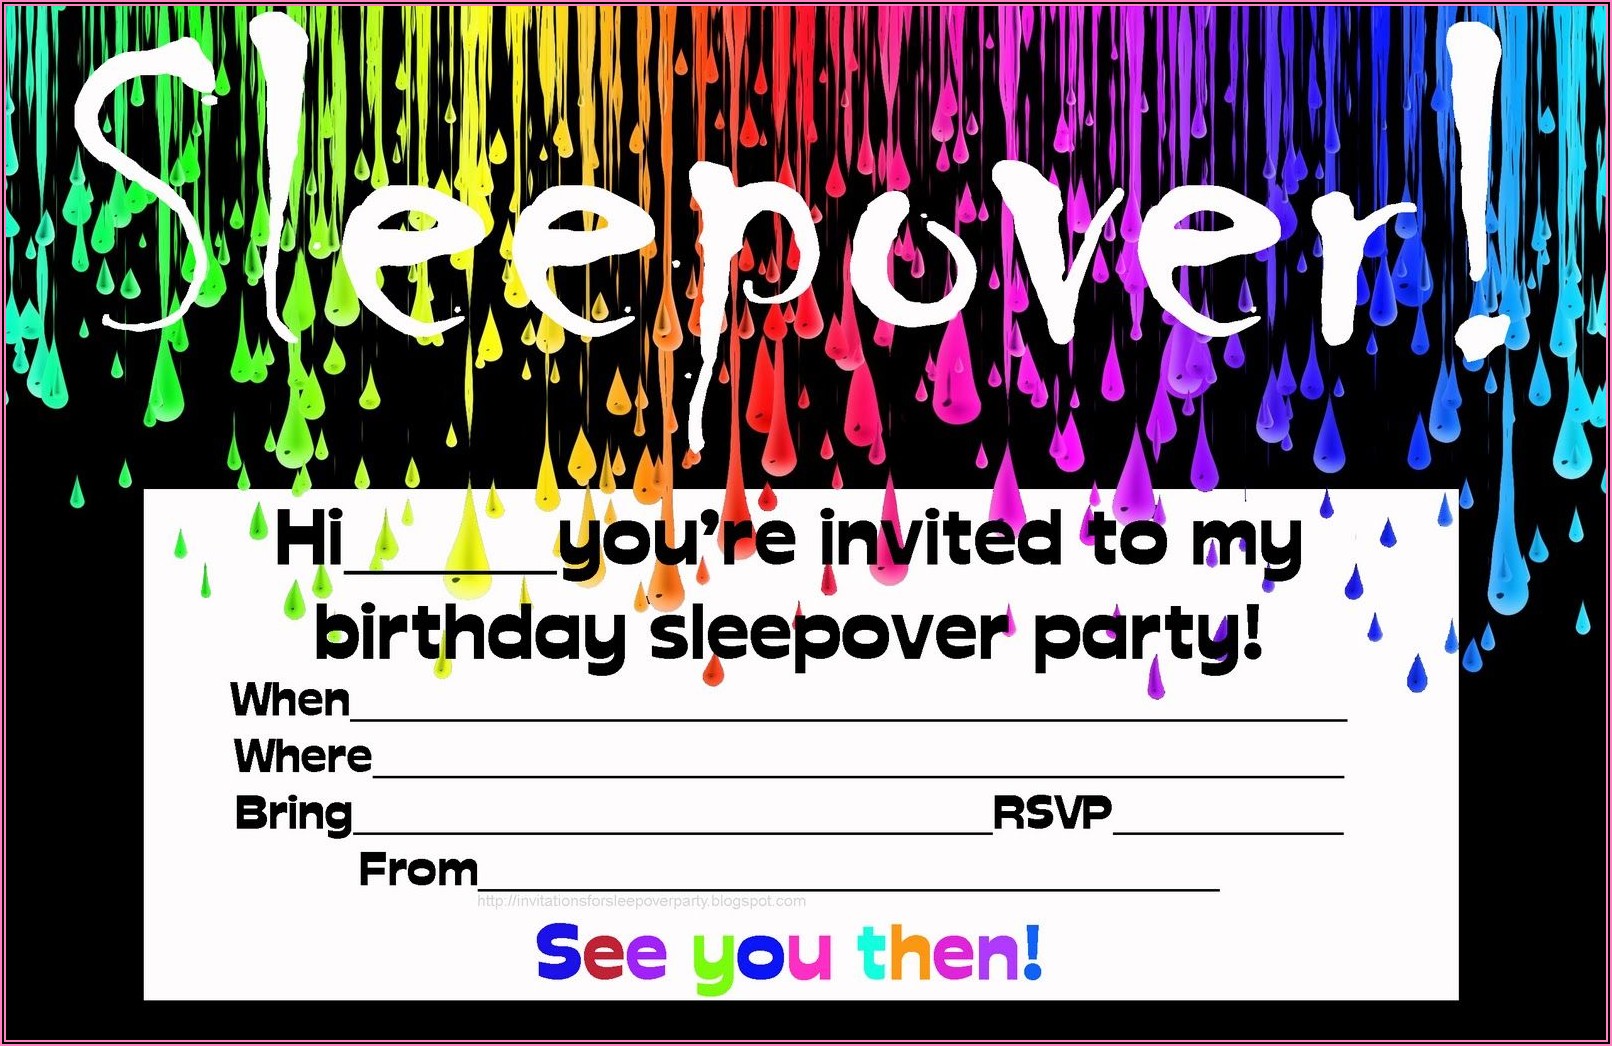 13th Birthday Party Invitations Printable